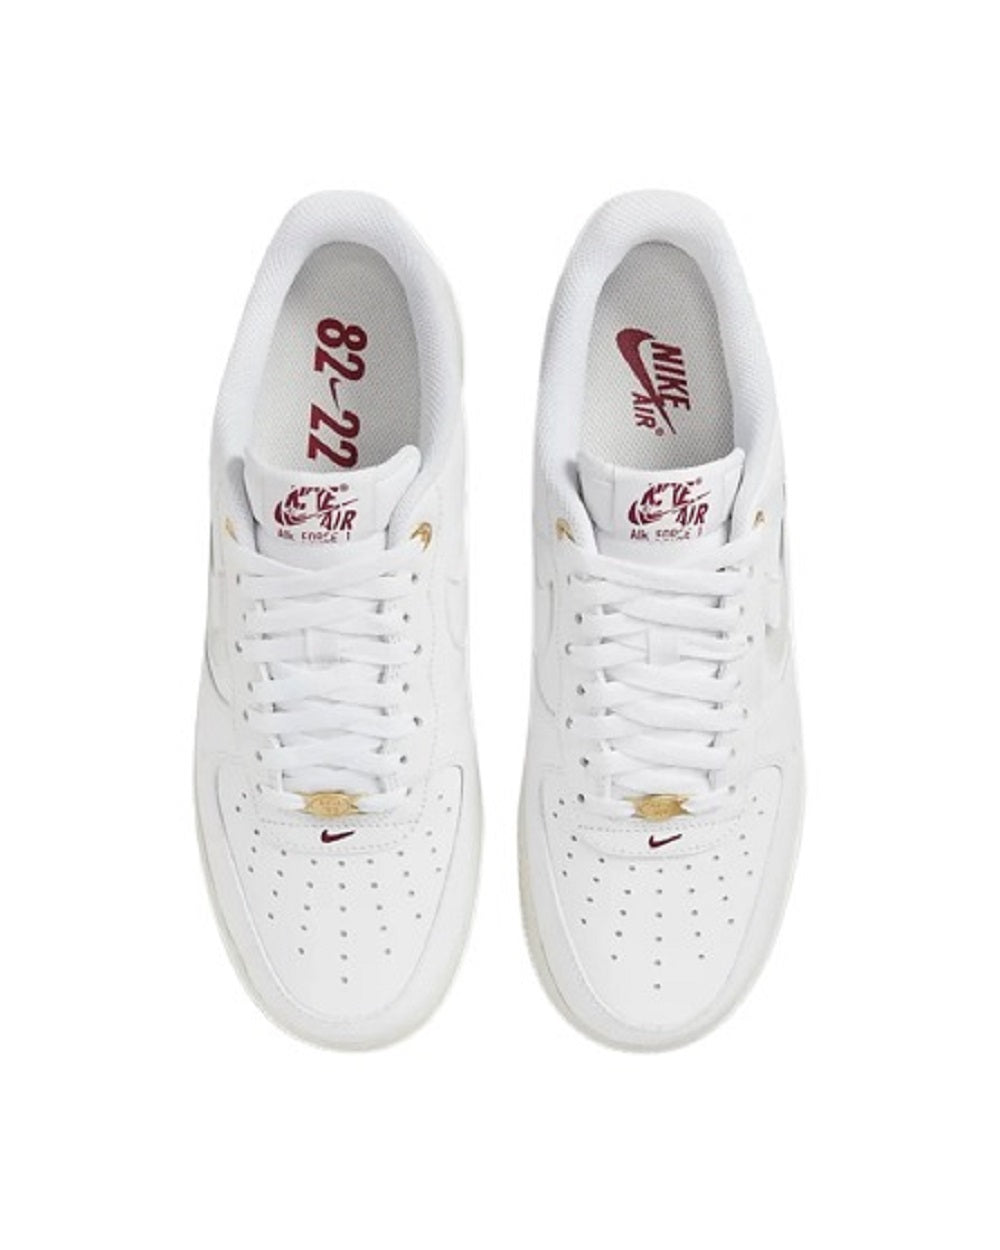 Nike Mens Air Force Low 07 Premium Sneakers,White/Sail/Team Red